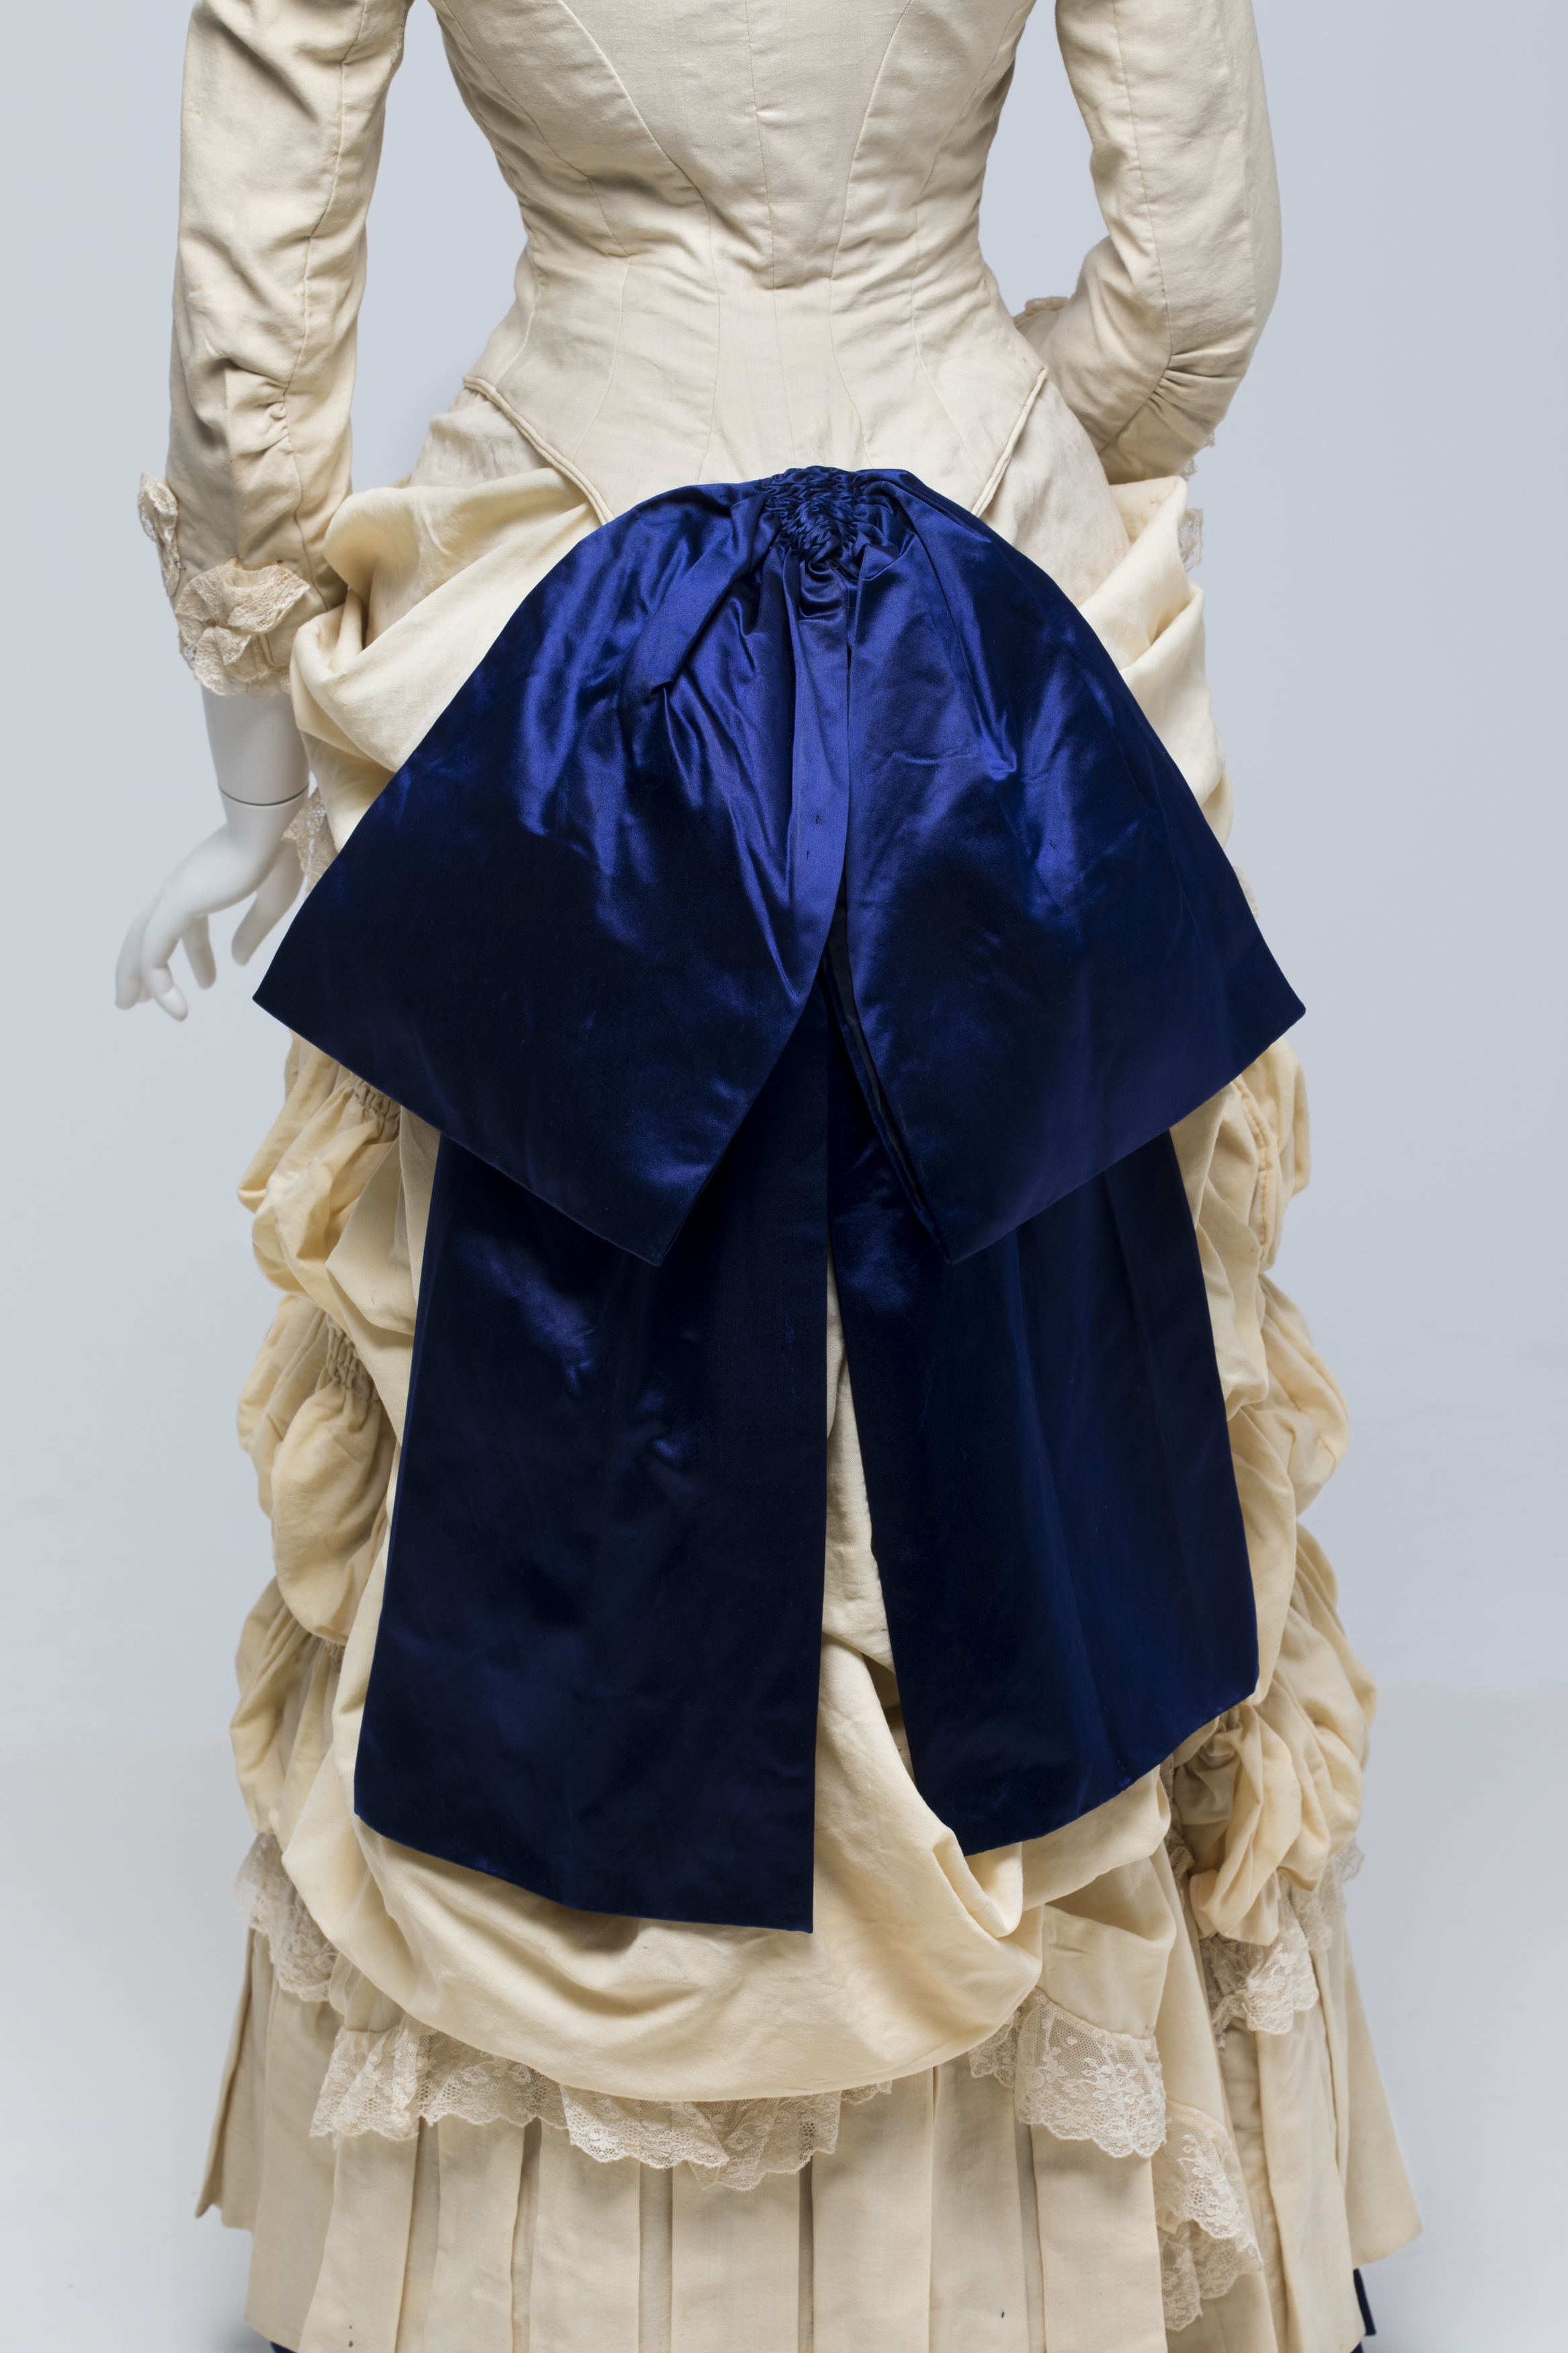 Bridesmaids dress worn by Isabella Murray